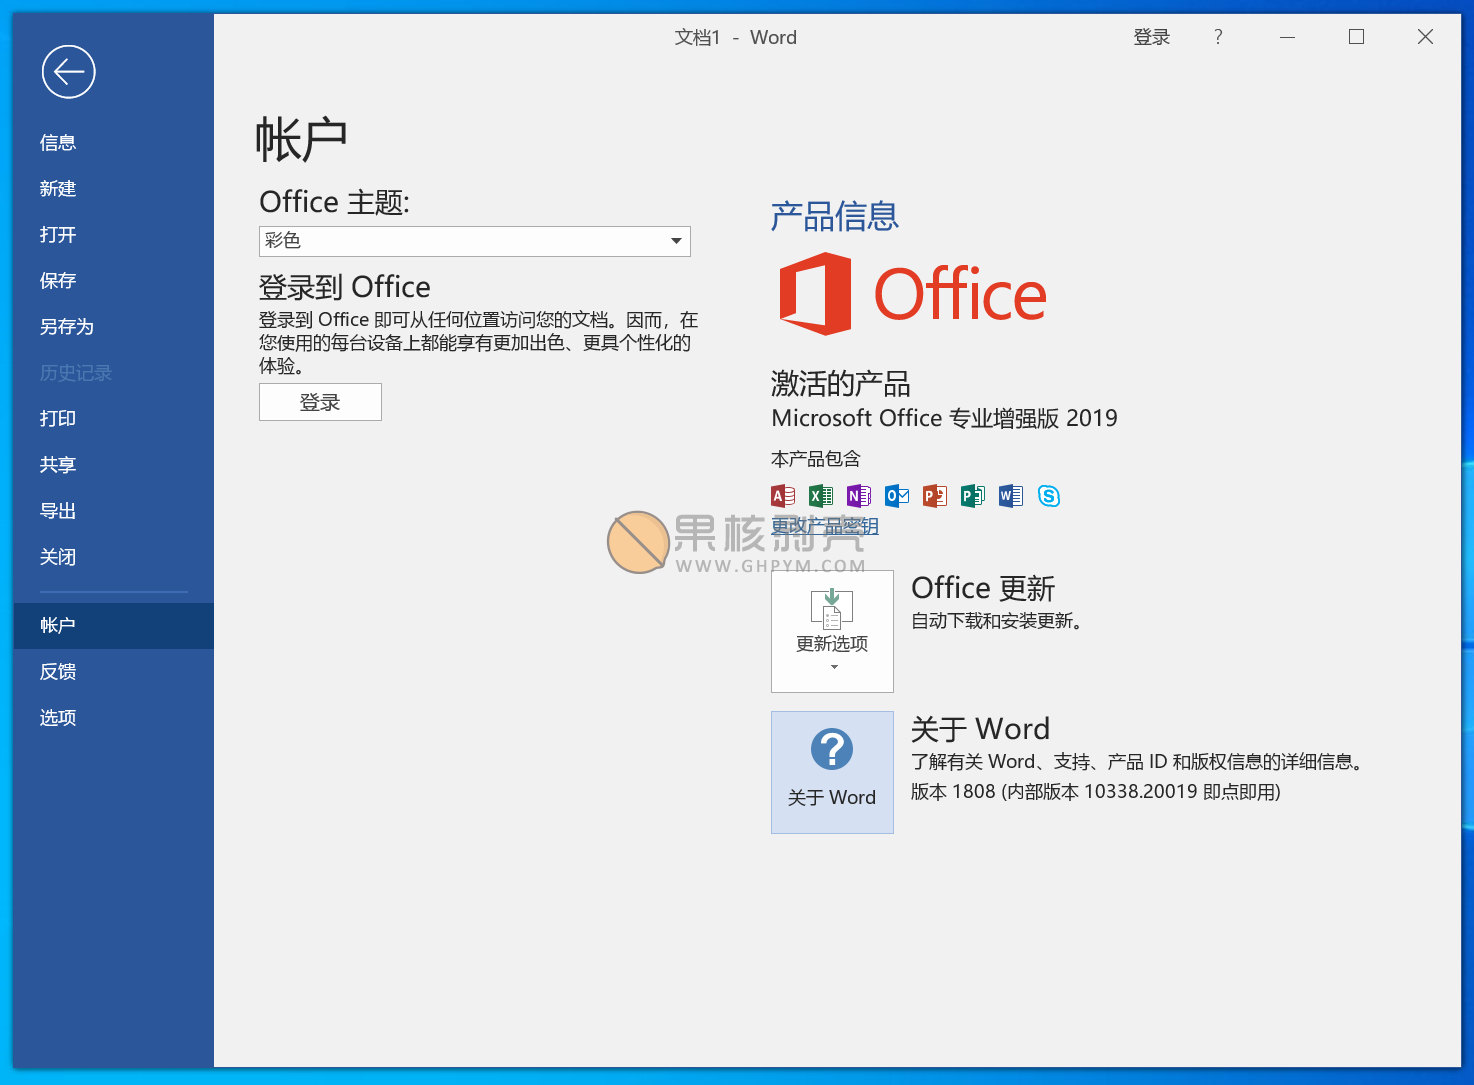 Microsoft Office 2019 2022年11月批量许可版